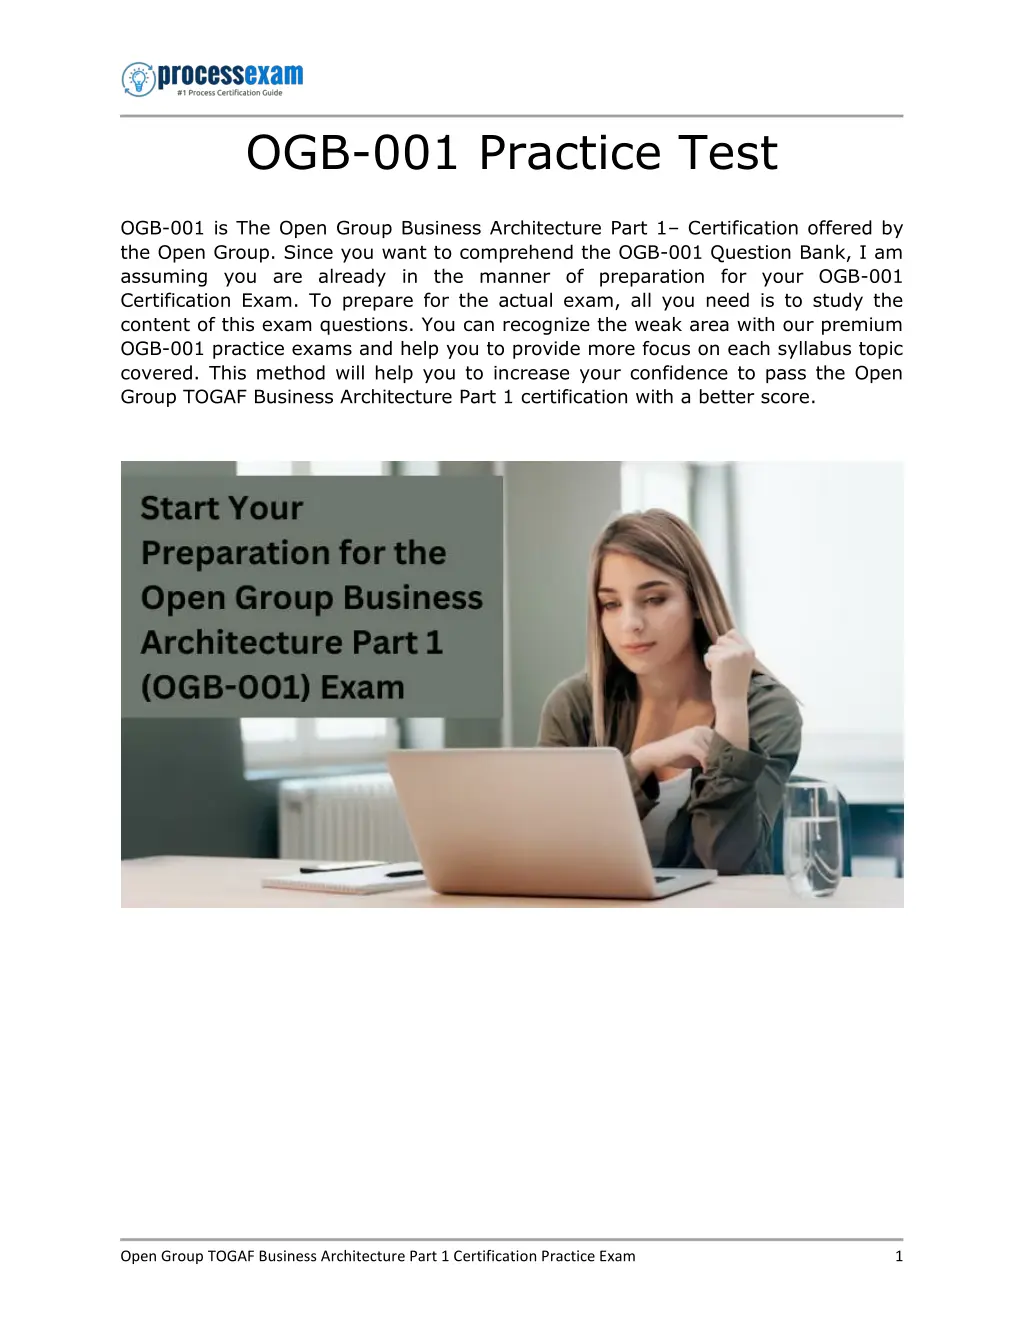 ogb 001 practice test